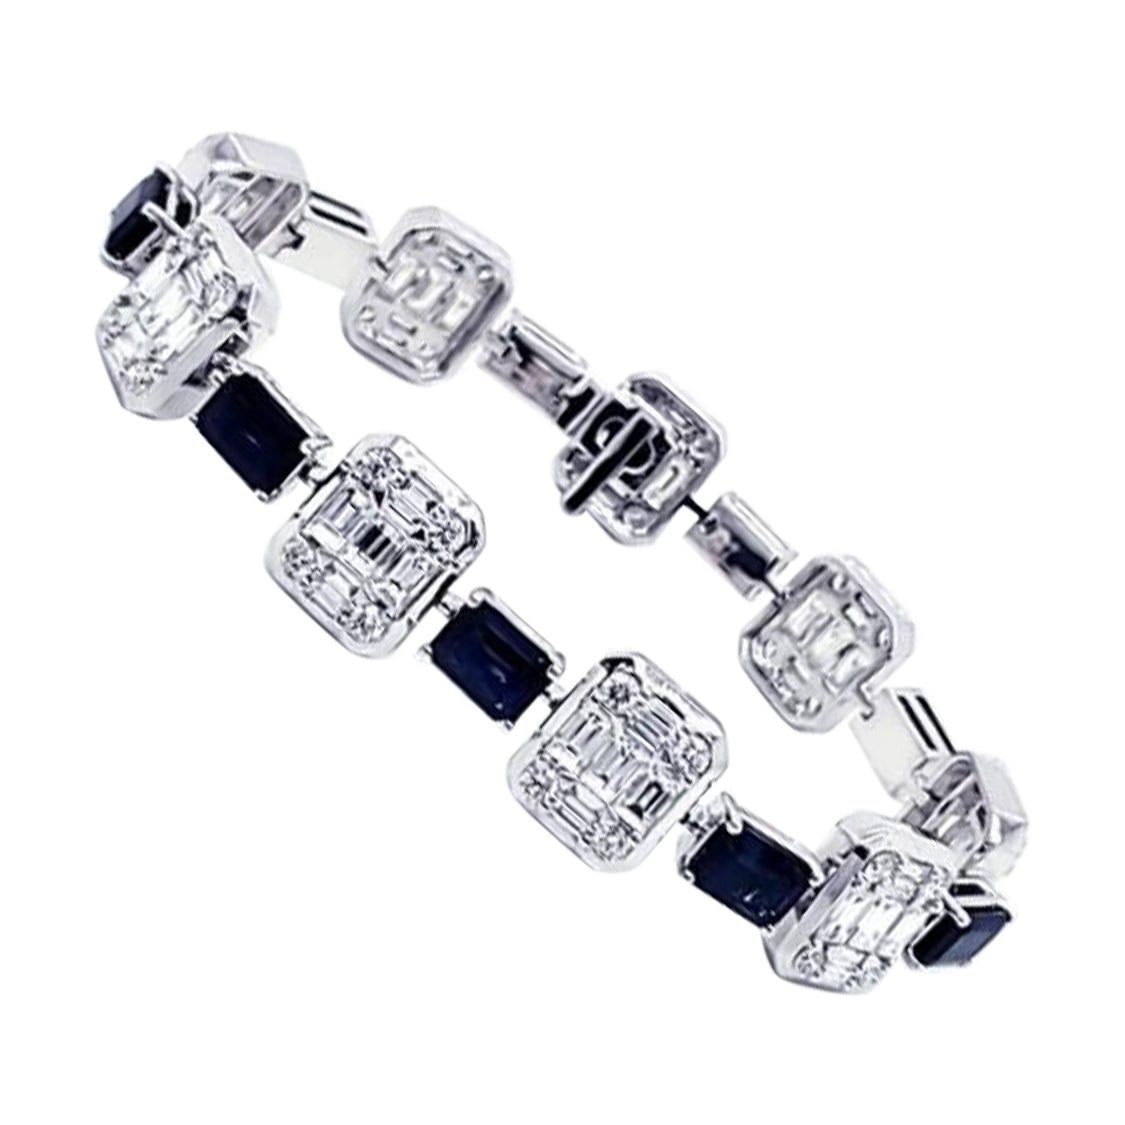 NEU $66, 818 18KT Gold Glitzerndes Fancy Baguette-Diamant-Blaues Saphir-Armband, Neu mit Diamanten